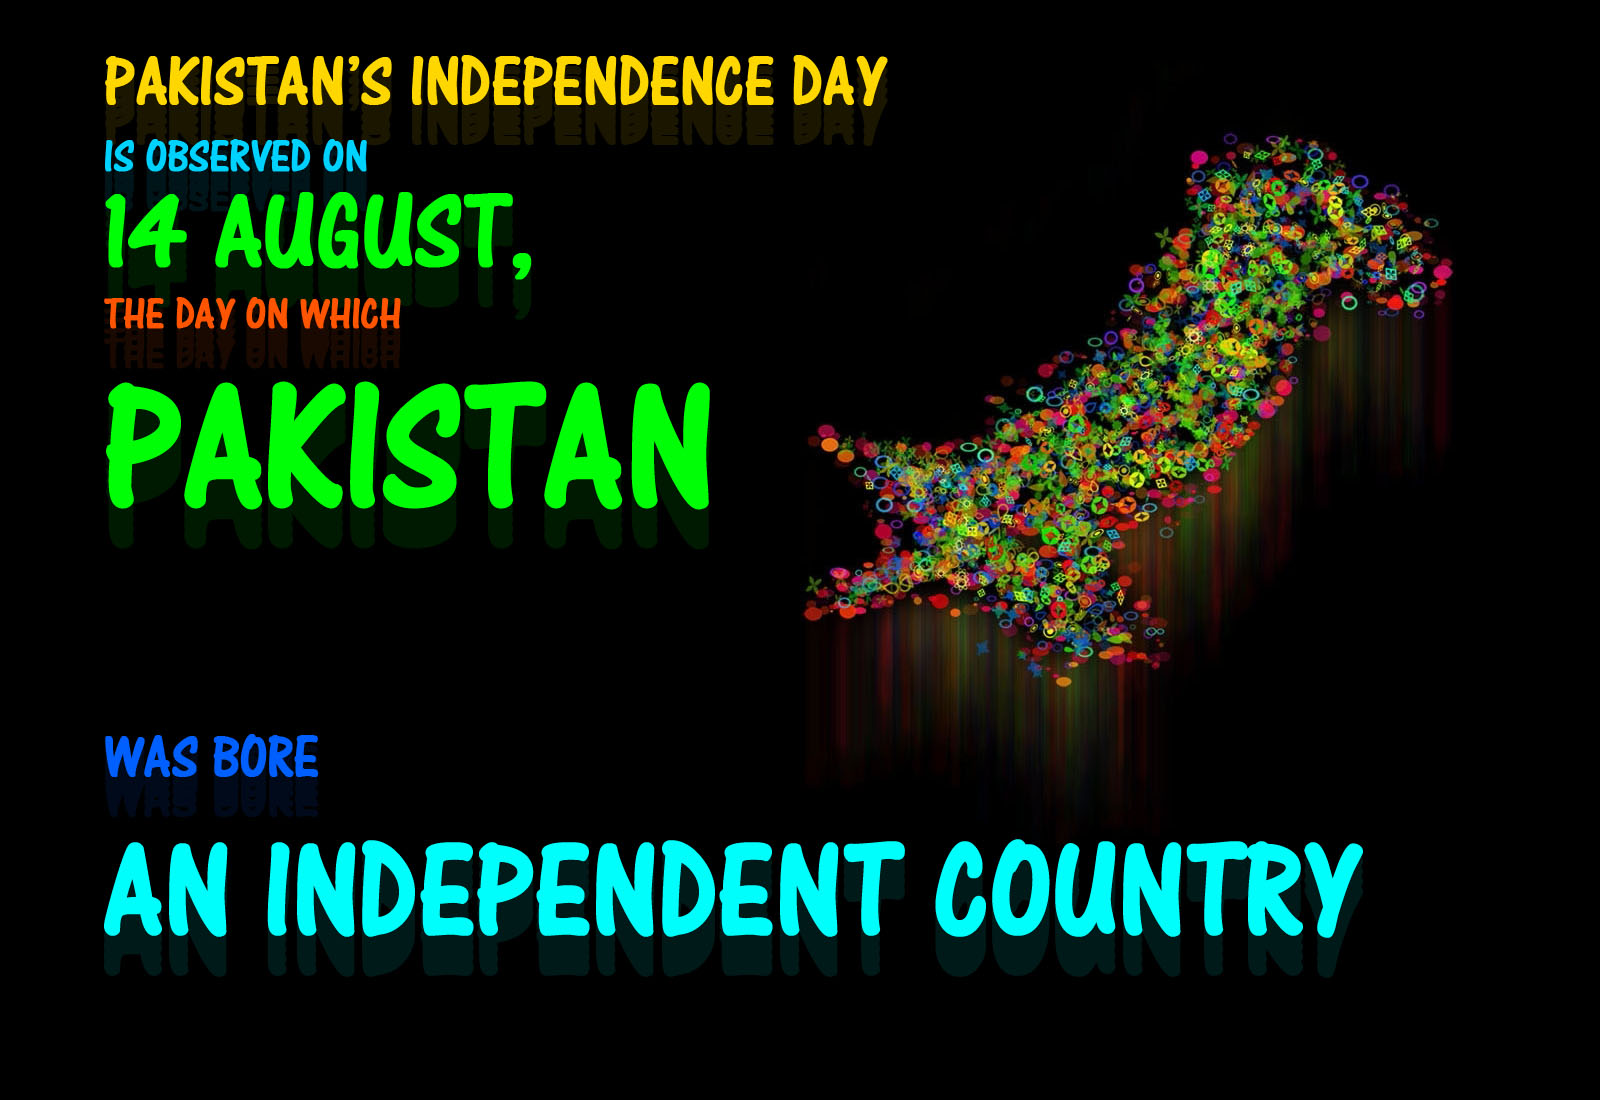 http://3.bp.blogspot.com/-jo-i9OS6ED8/UB6p3Gg6M4I/AAAAAAAASVs/W26tfavi-Gg/s1600/pakistan-independence-day-wallpaper-2012-4.jpg